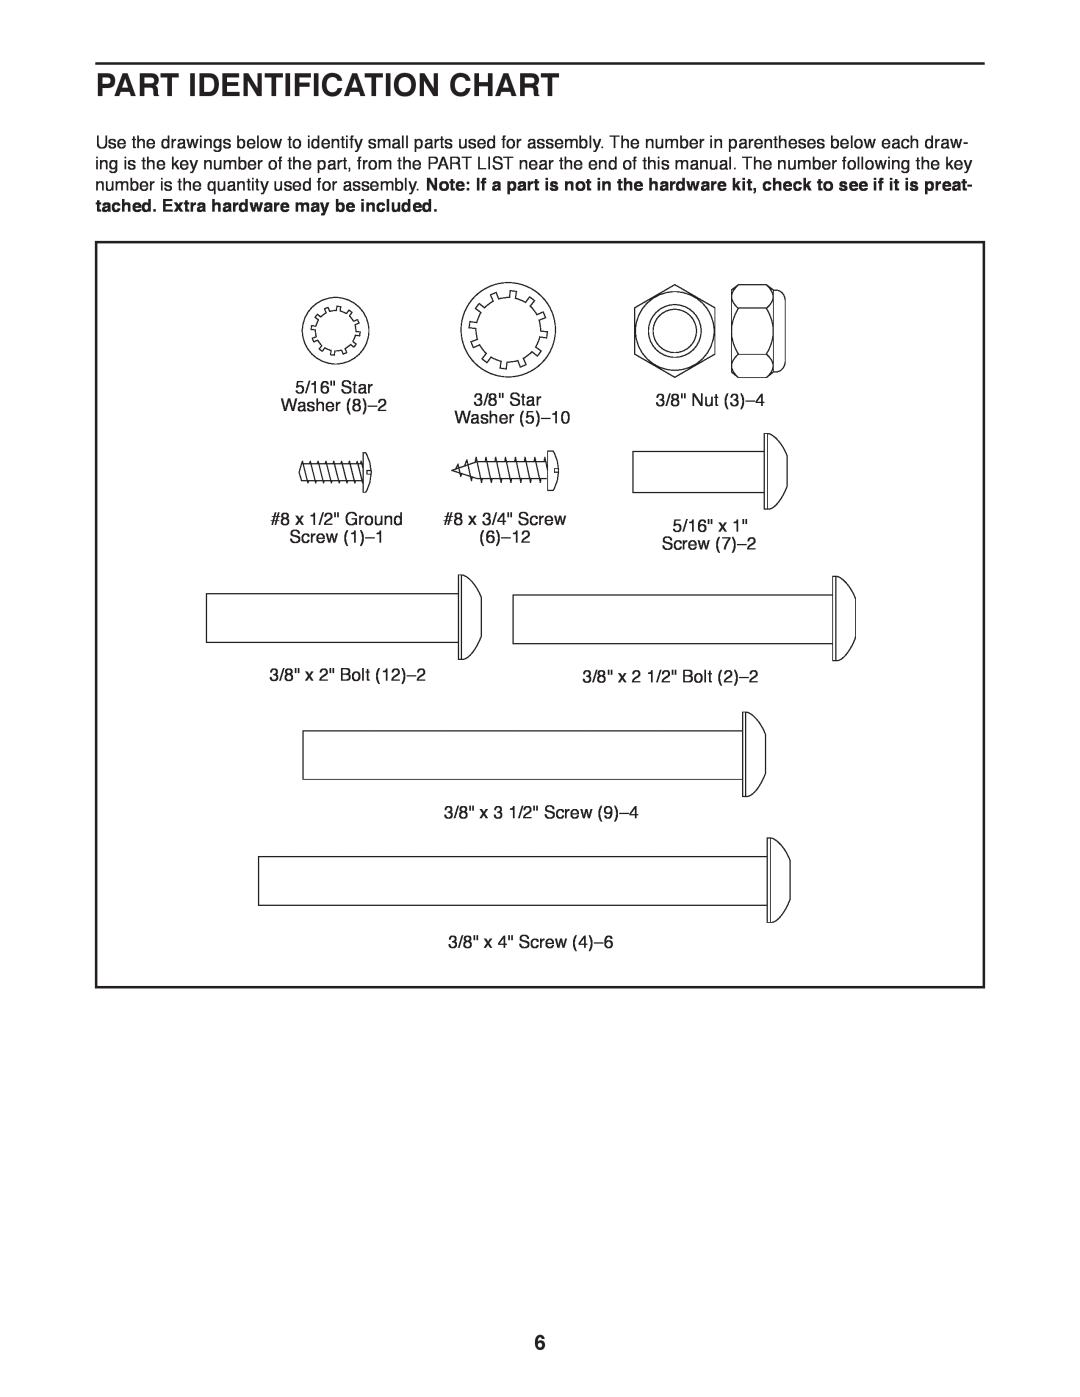 Sears NTL61011.1 user manual Part Identification Chart 